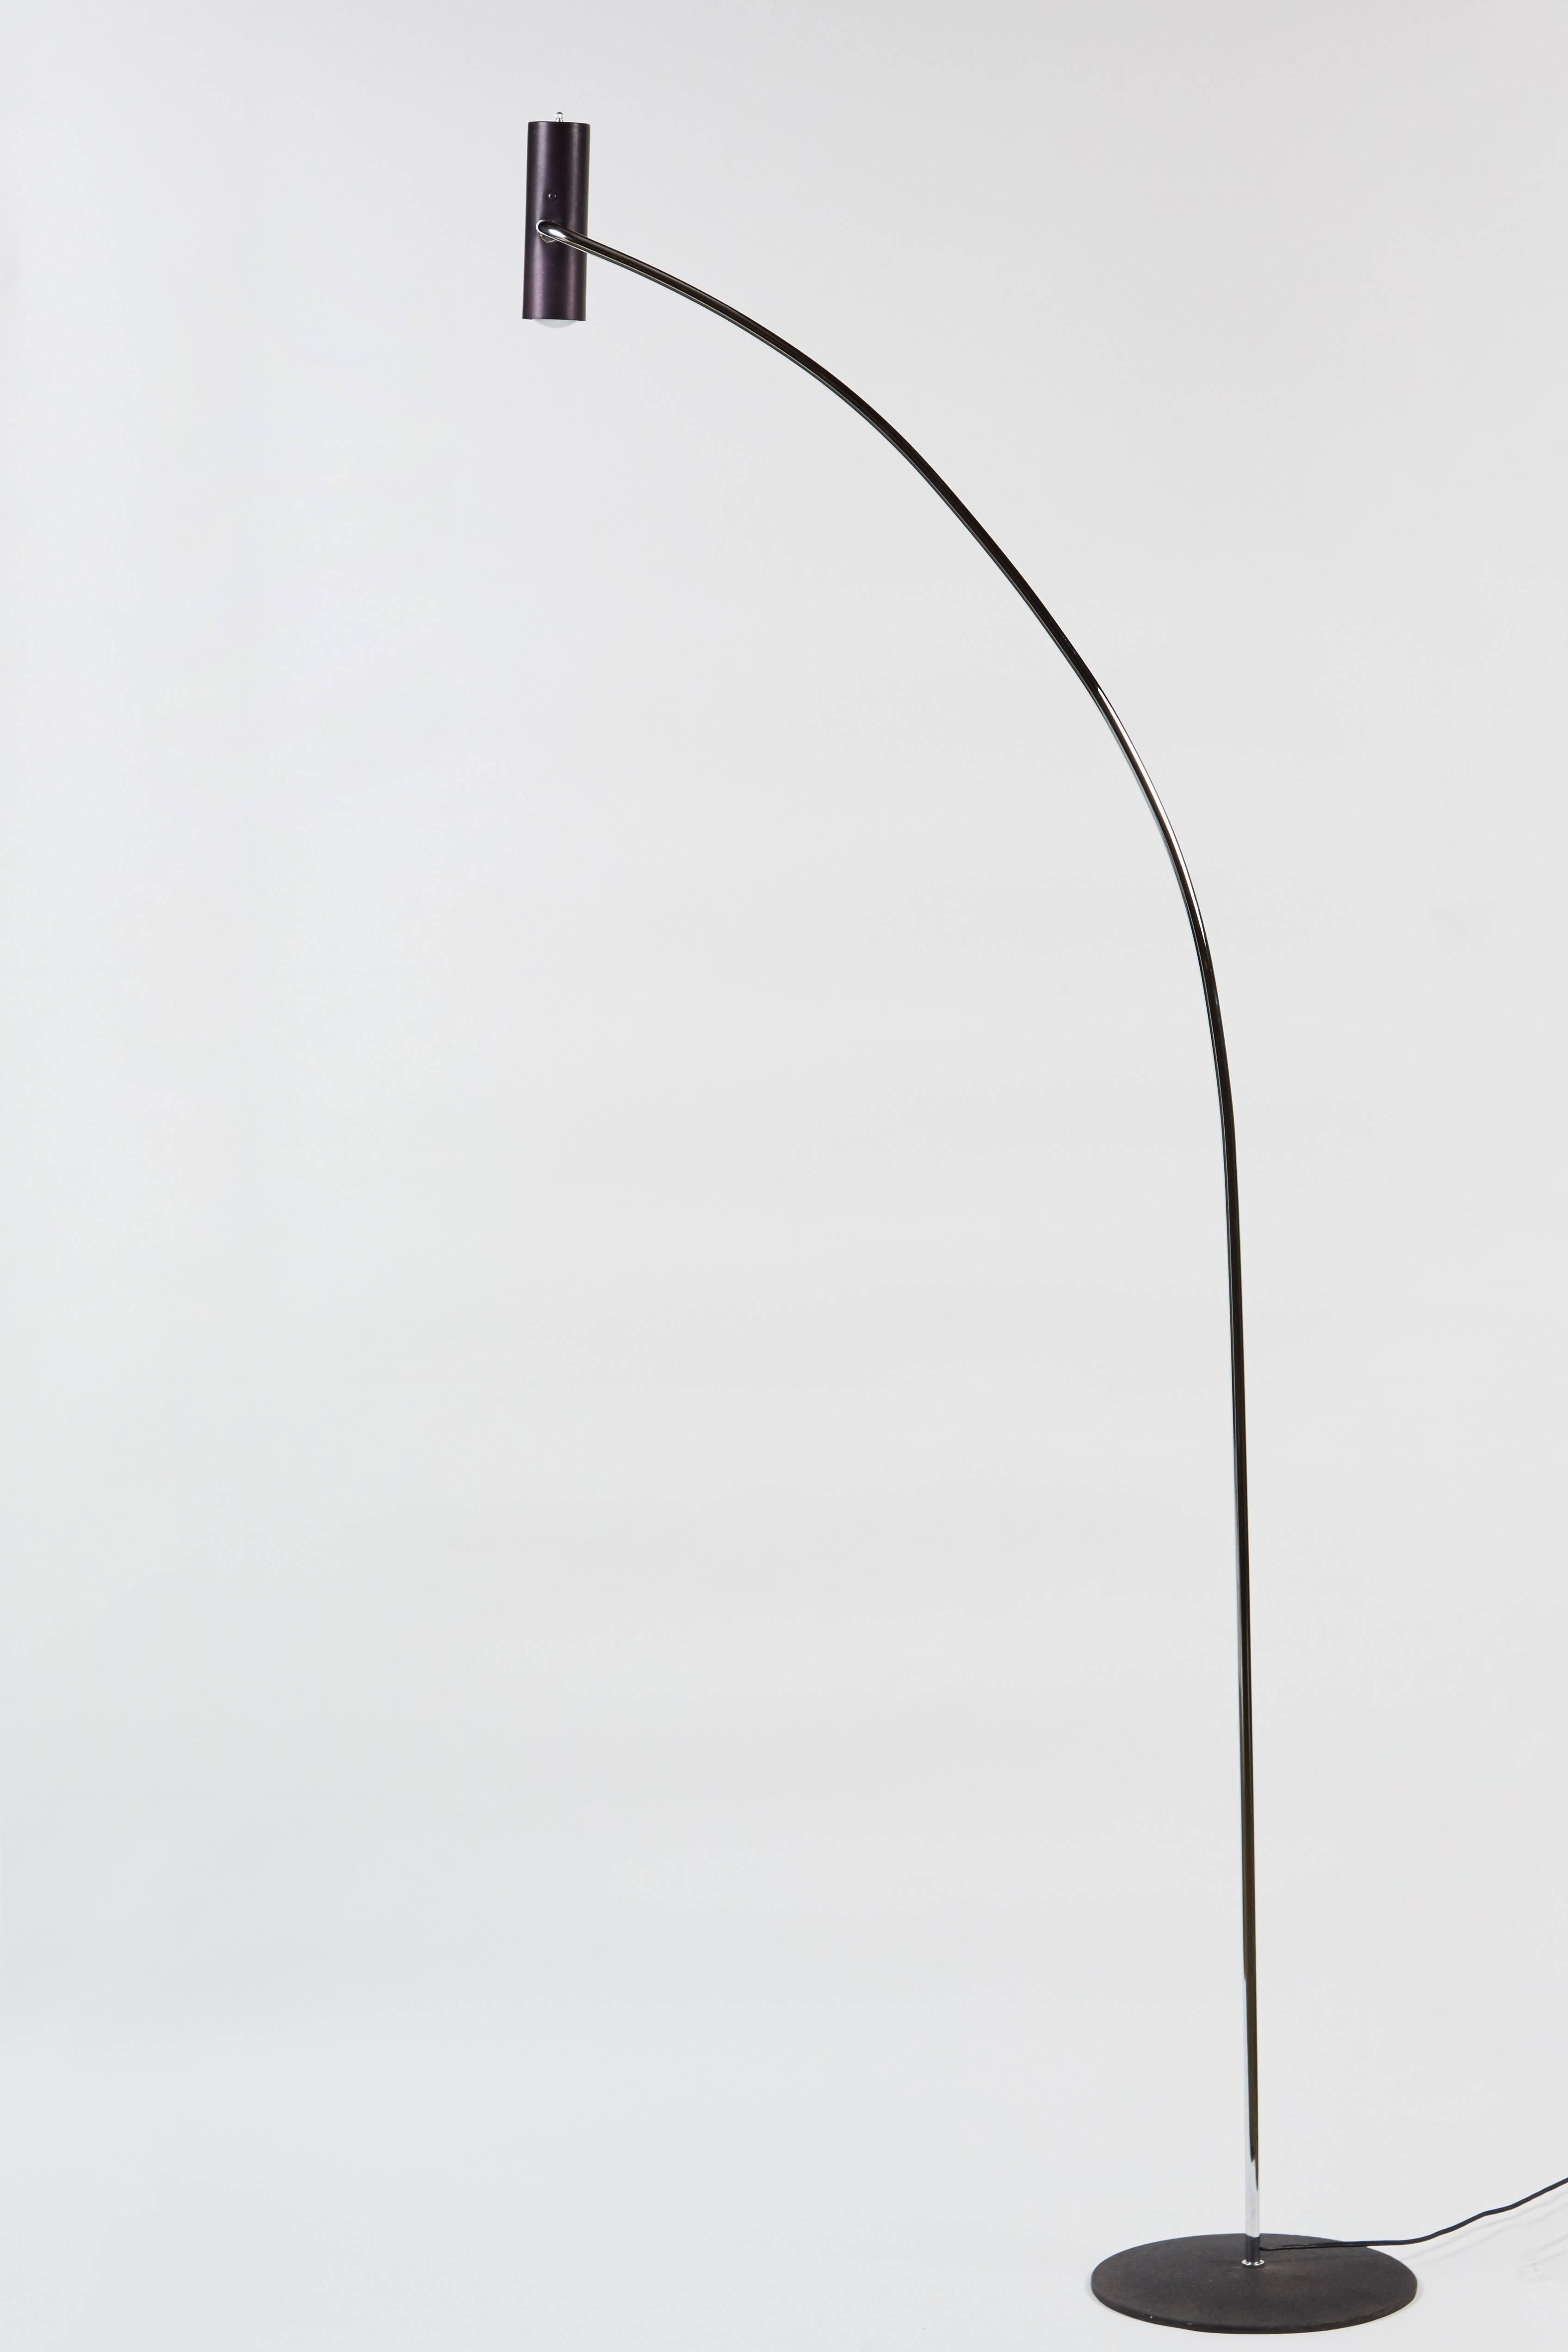 American Floor Lamp by Robert Sonneman